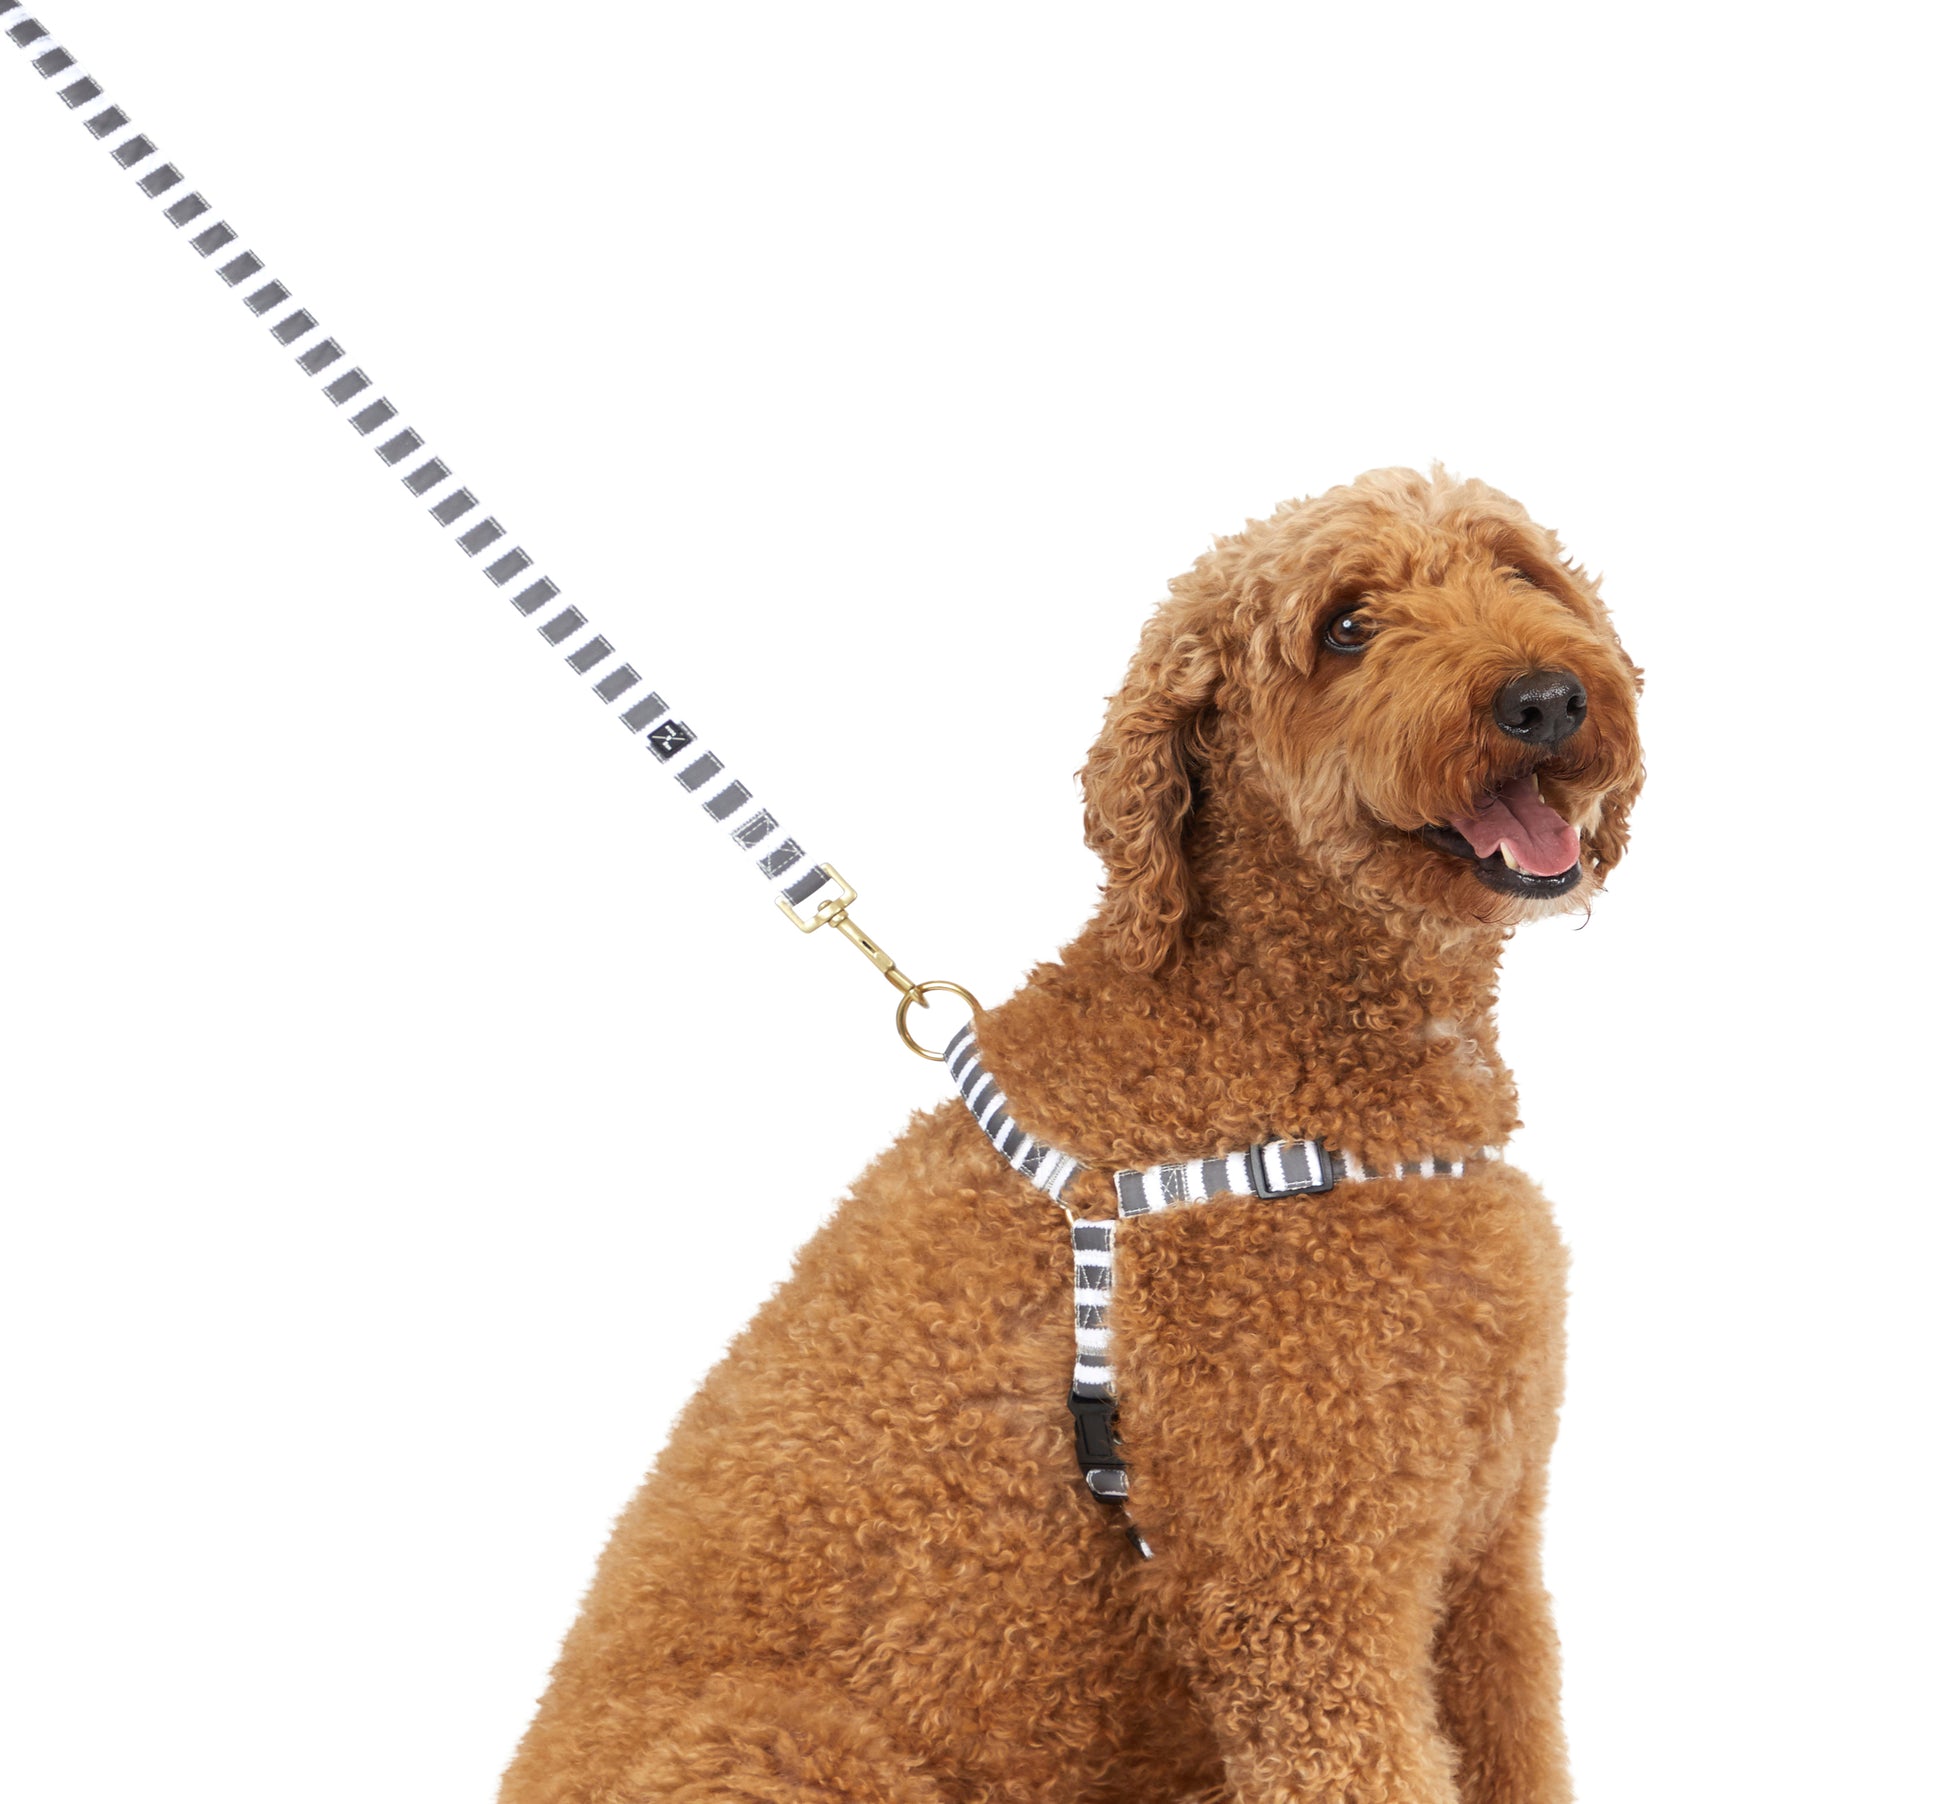 Mog and Bone Classic Hemp Dog Lead and Hemp Dog Harness- Charcoal Hamptons Stripe Print